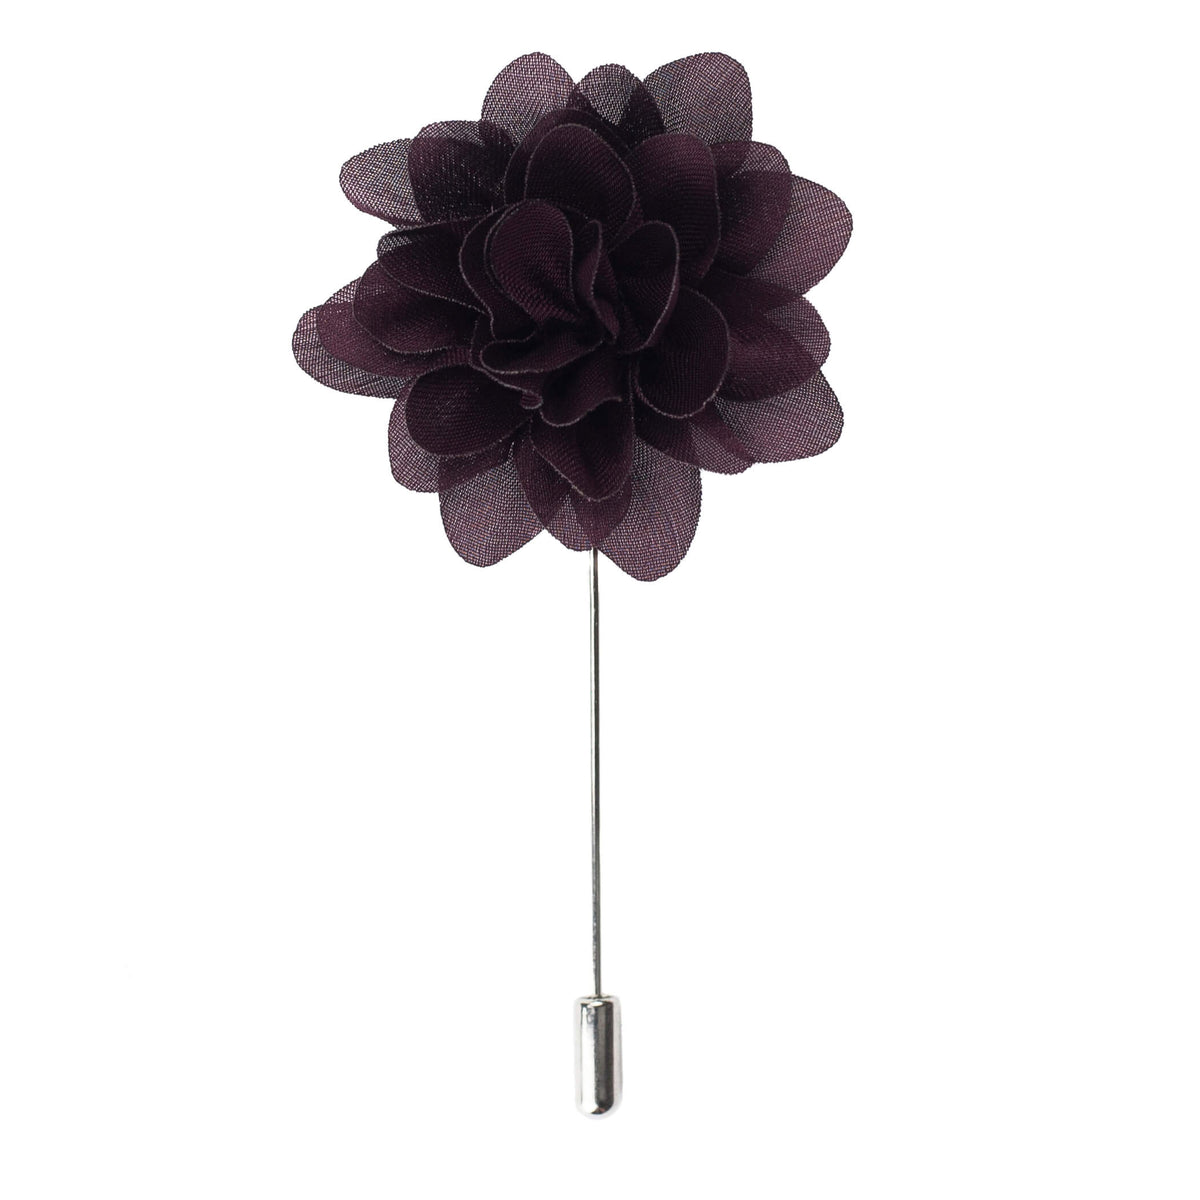 Amour Flower Lapel Pin, Burgundy - British D'sire